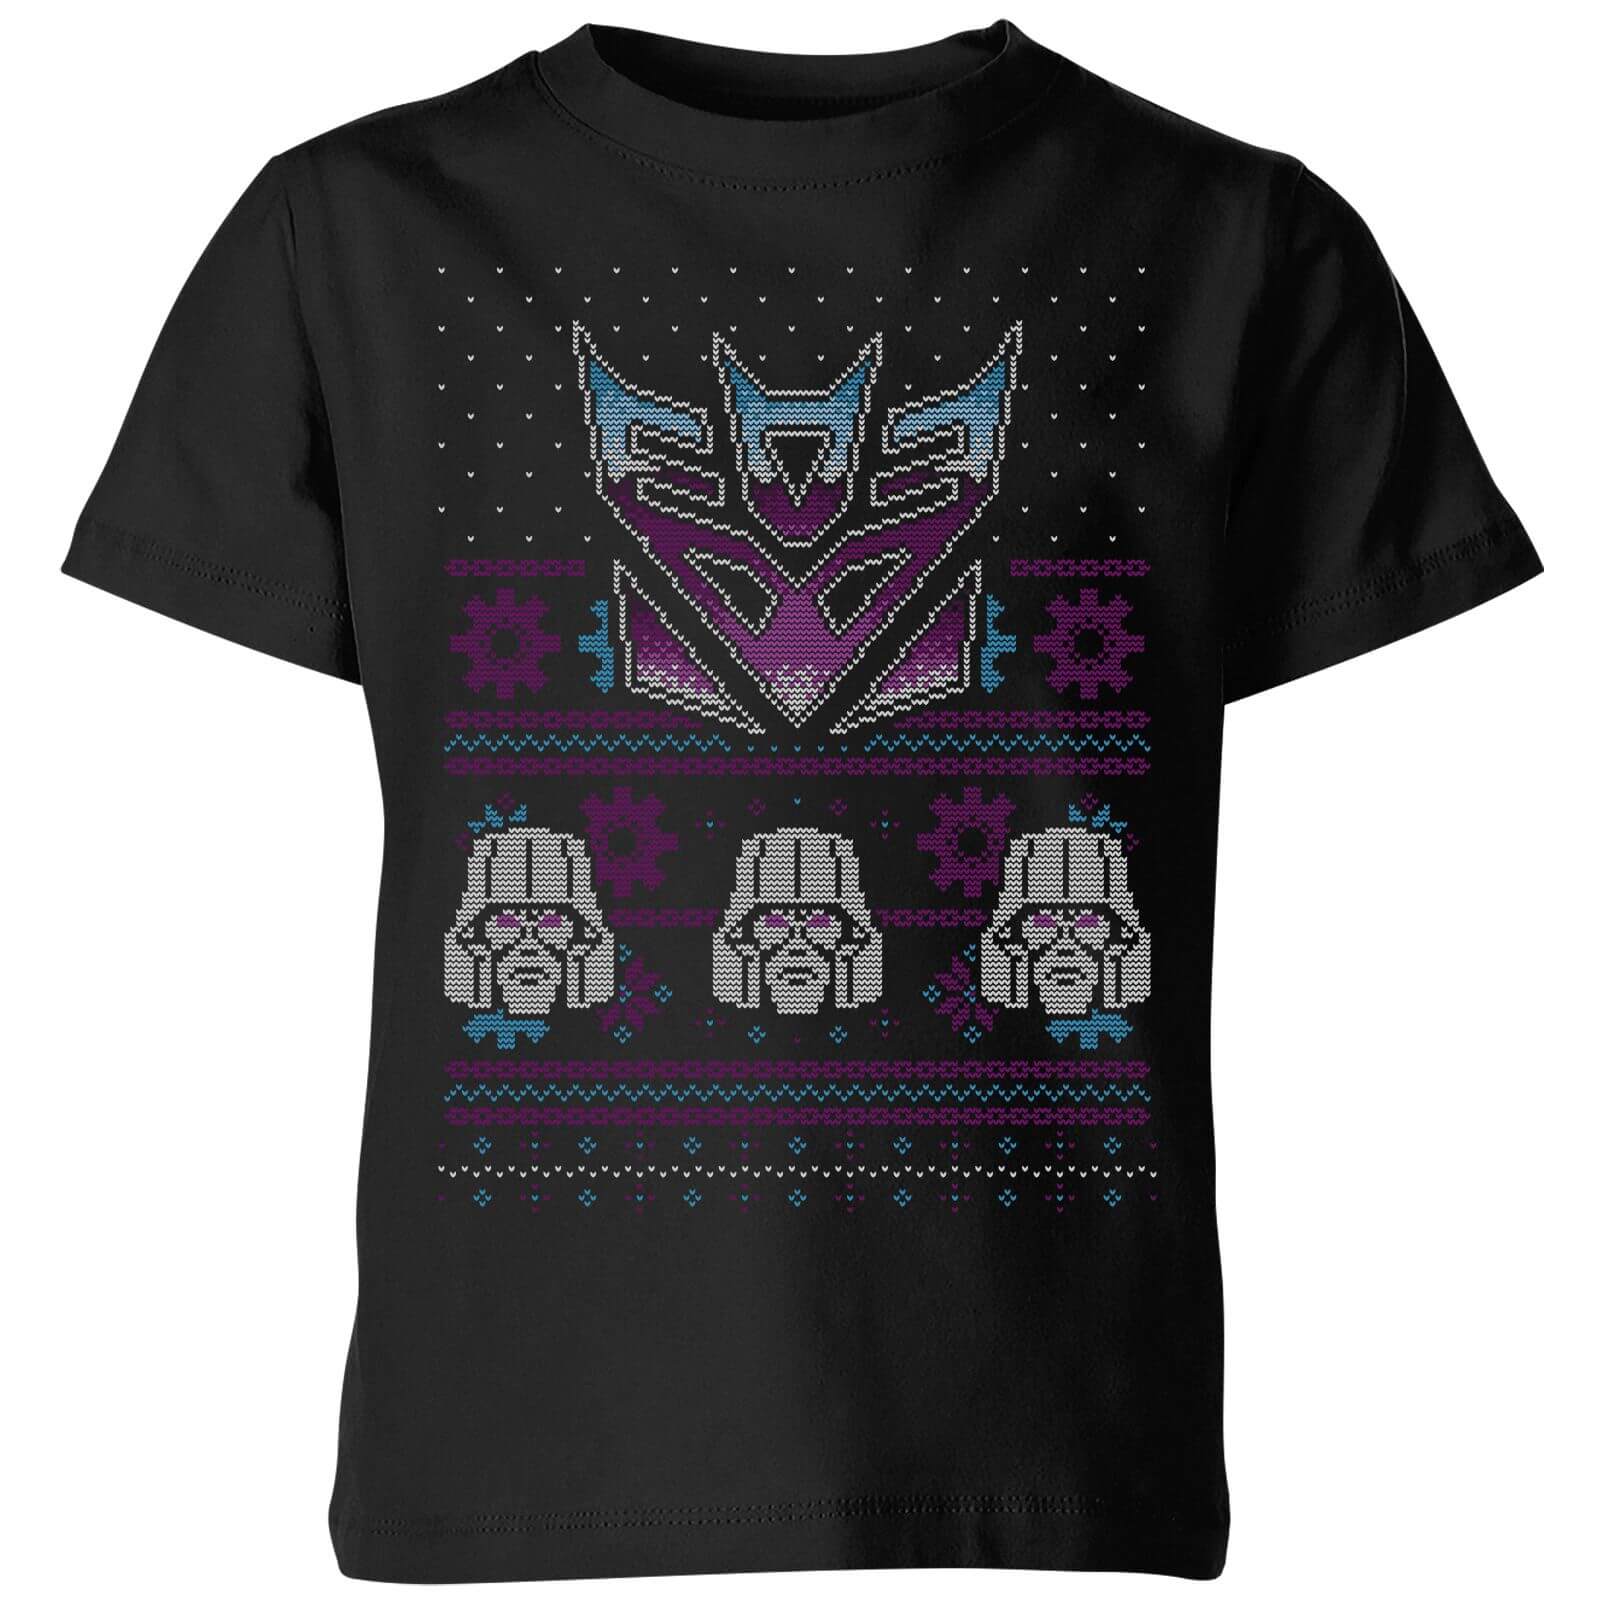 Hasbro Decepticons Classic Ugly Knit Kids' Christmas T-Shirt - Black - 5-6 Years - Black